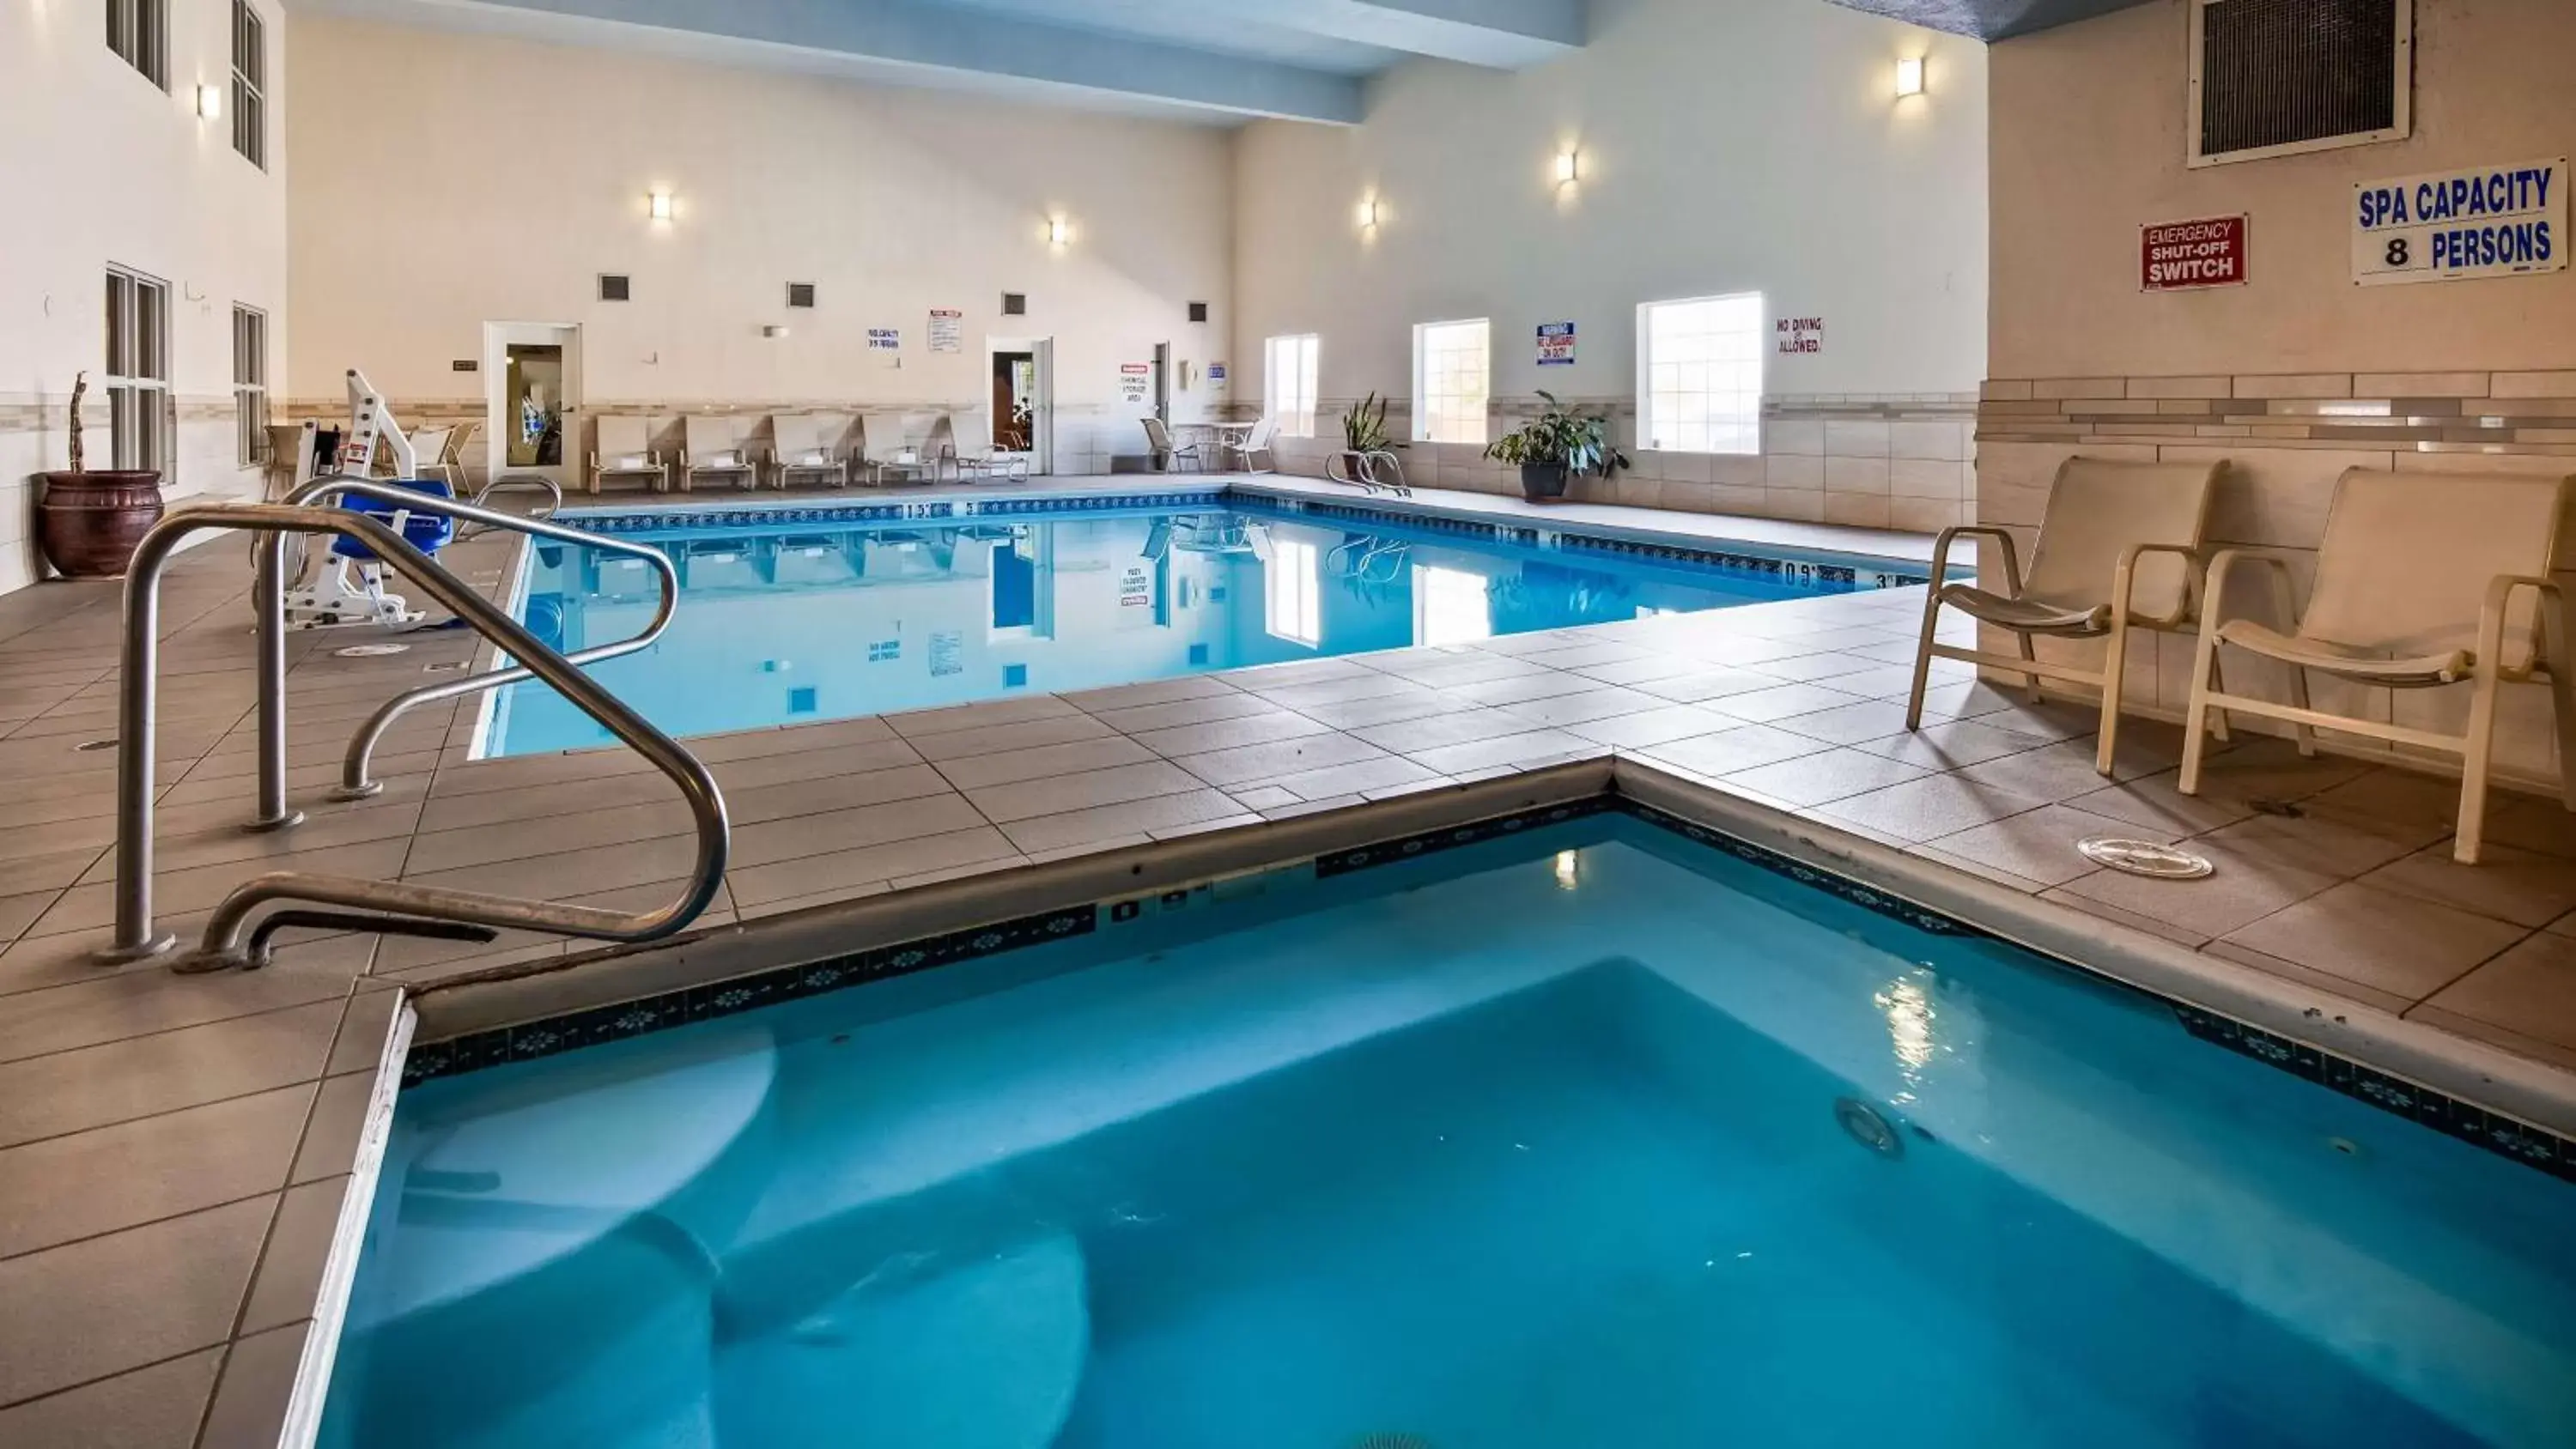 On site, Swimming Pool in Best Western Plus Executive Suites Albuquerque